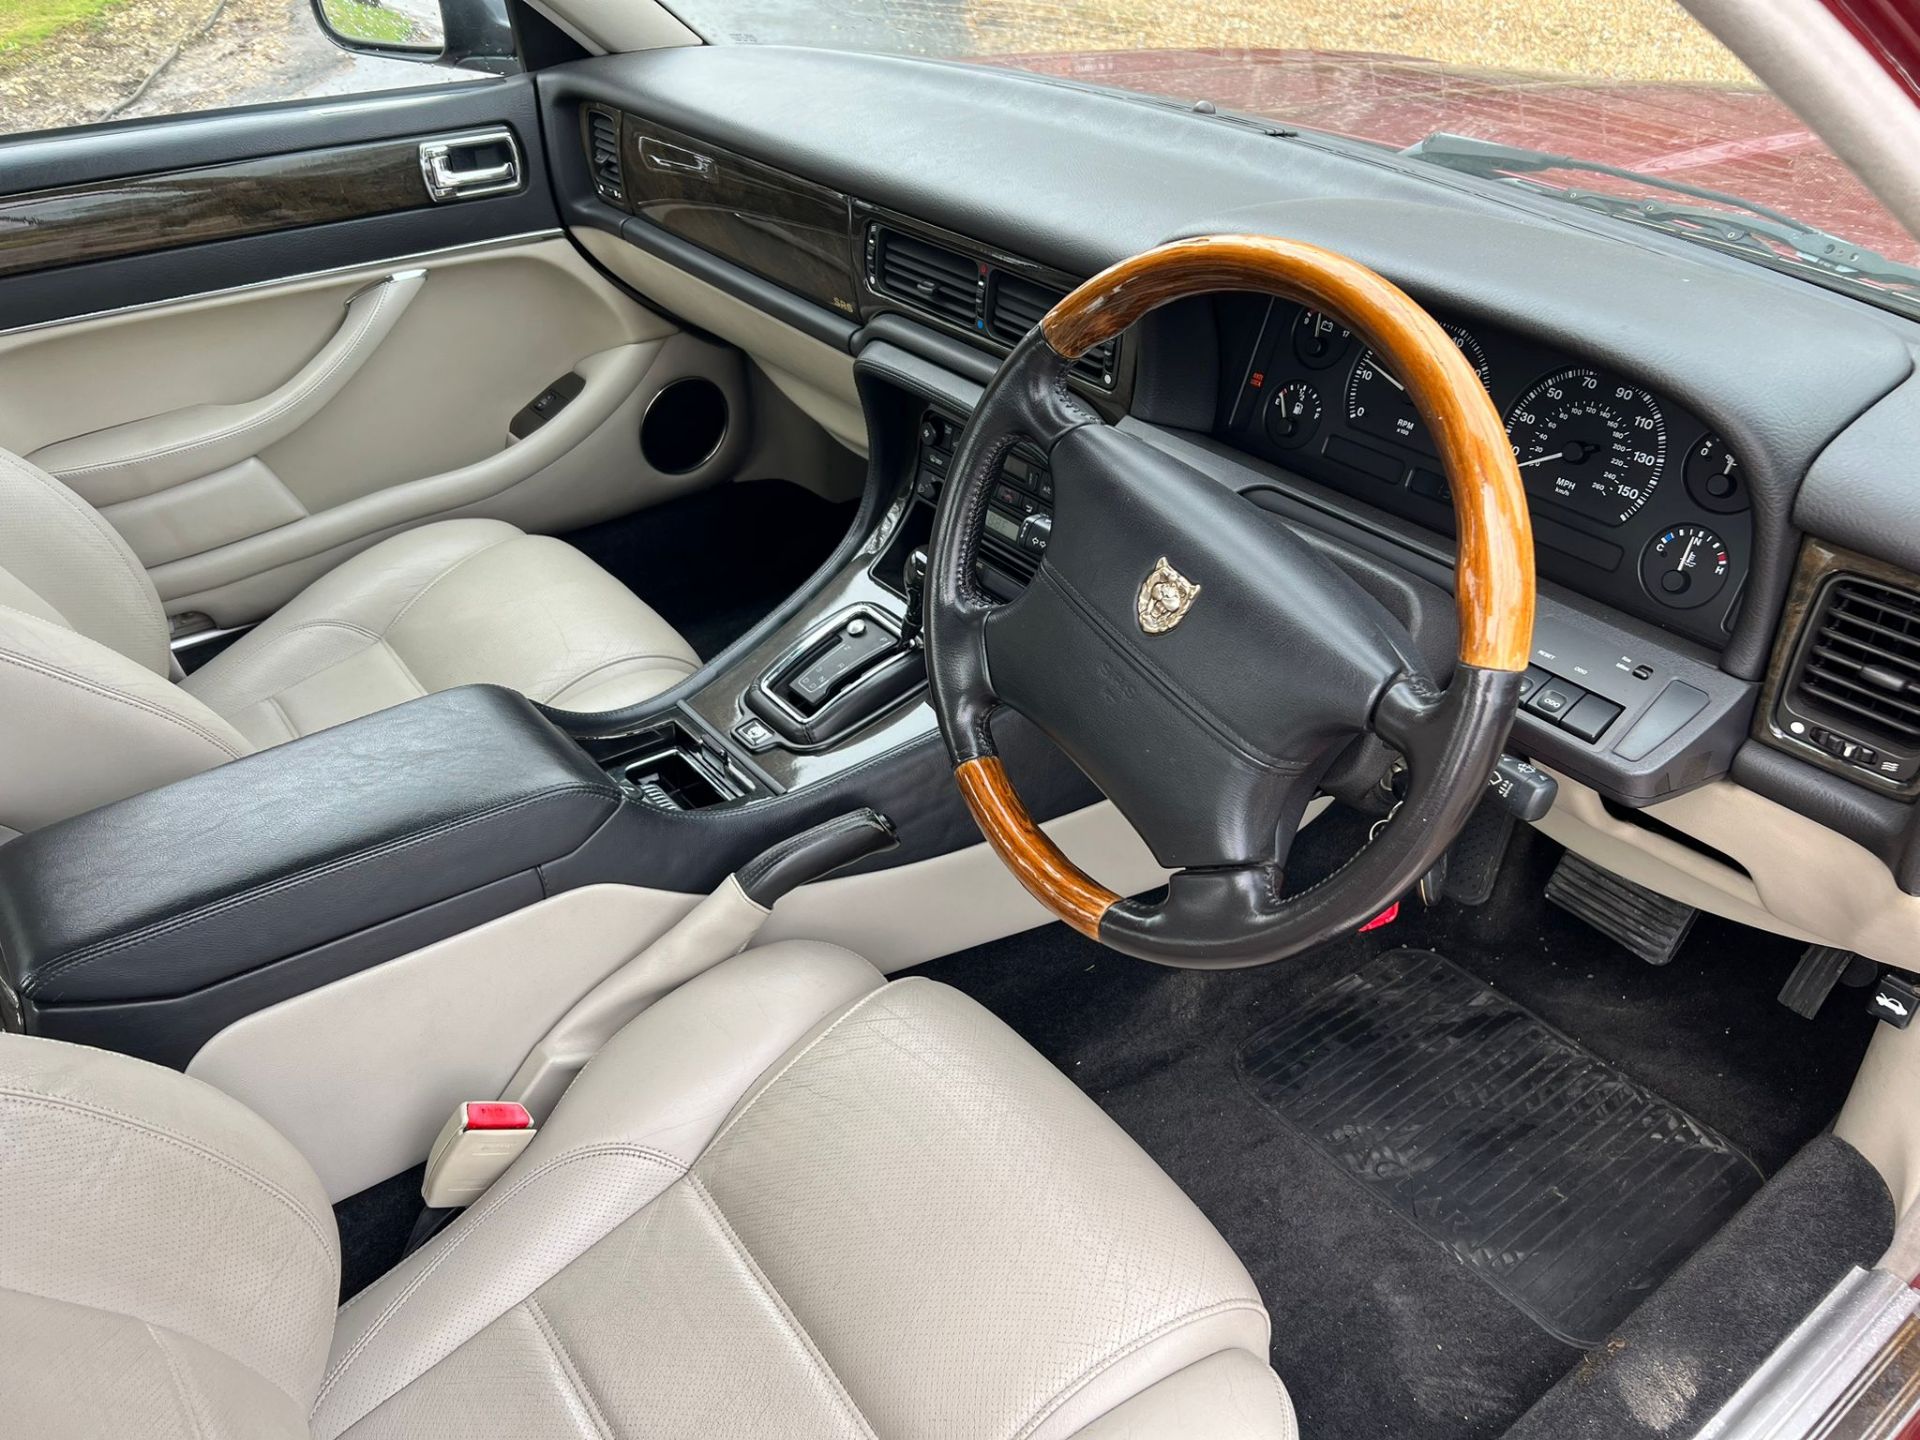 Jaguar XJ6 Sport 1995 - Image 6 of 25